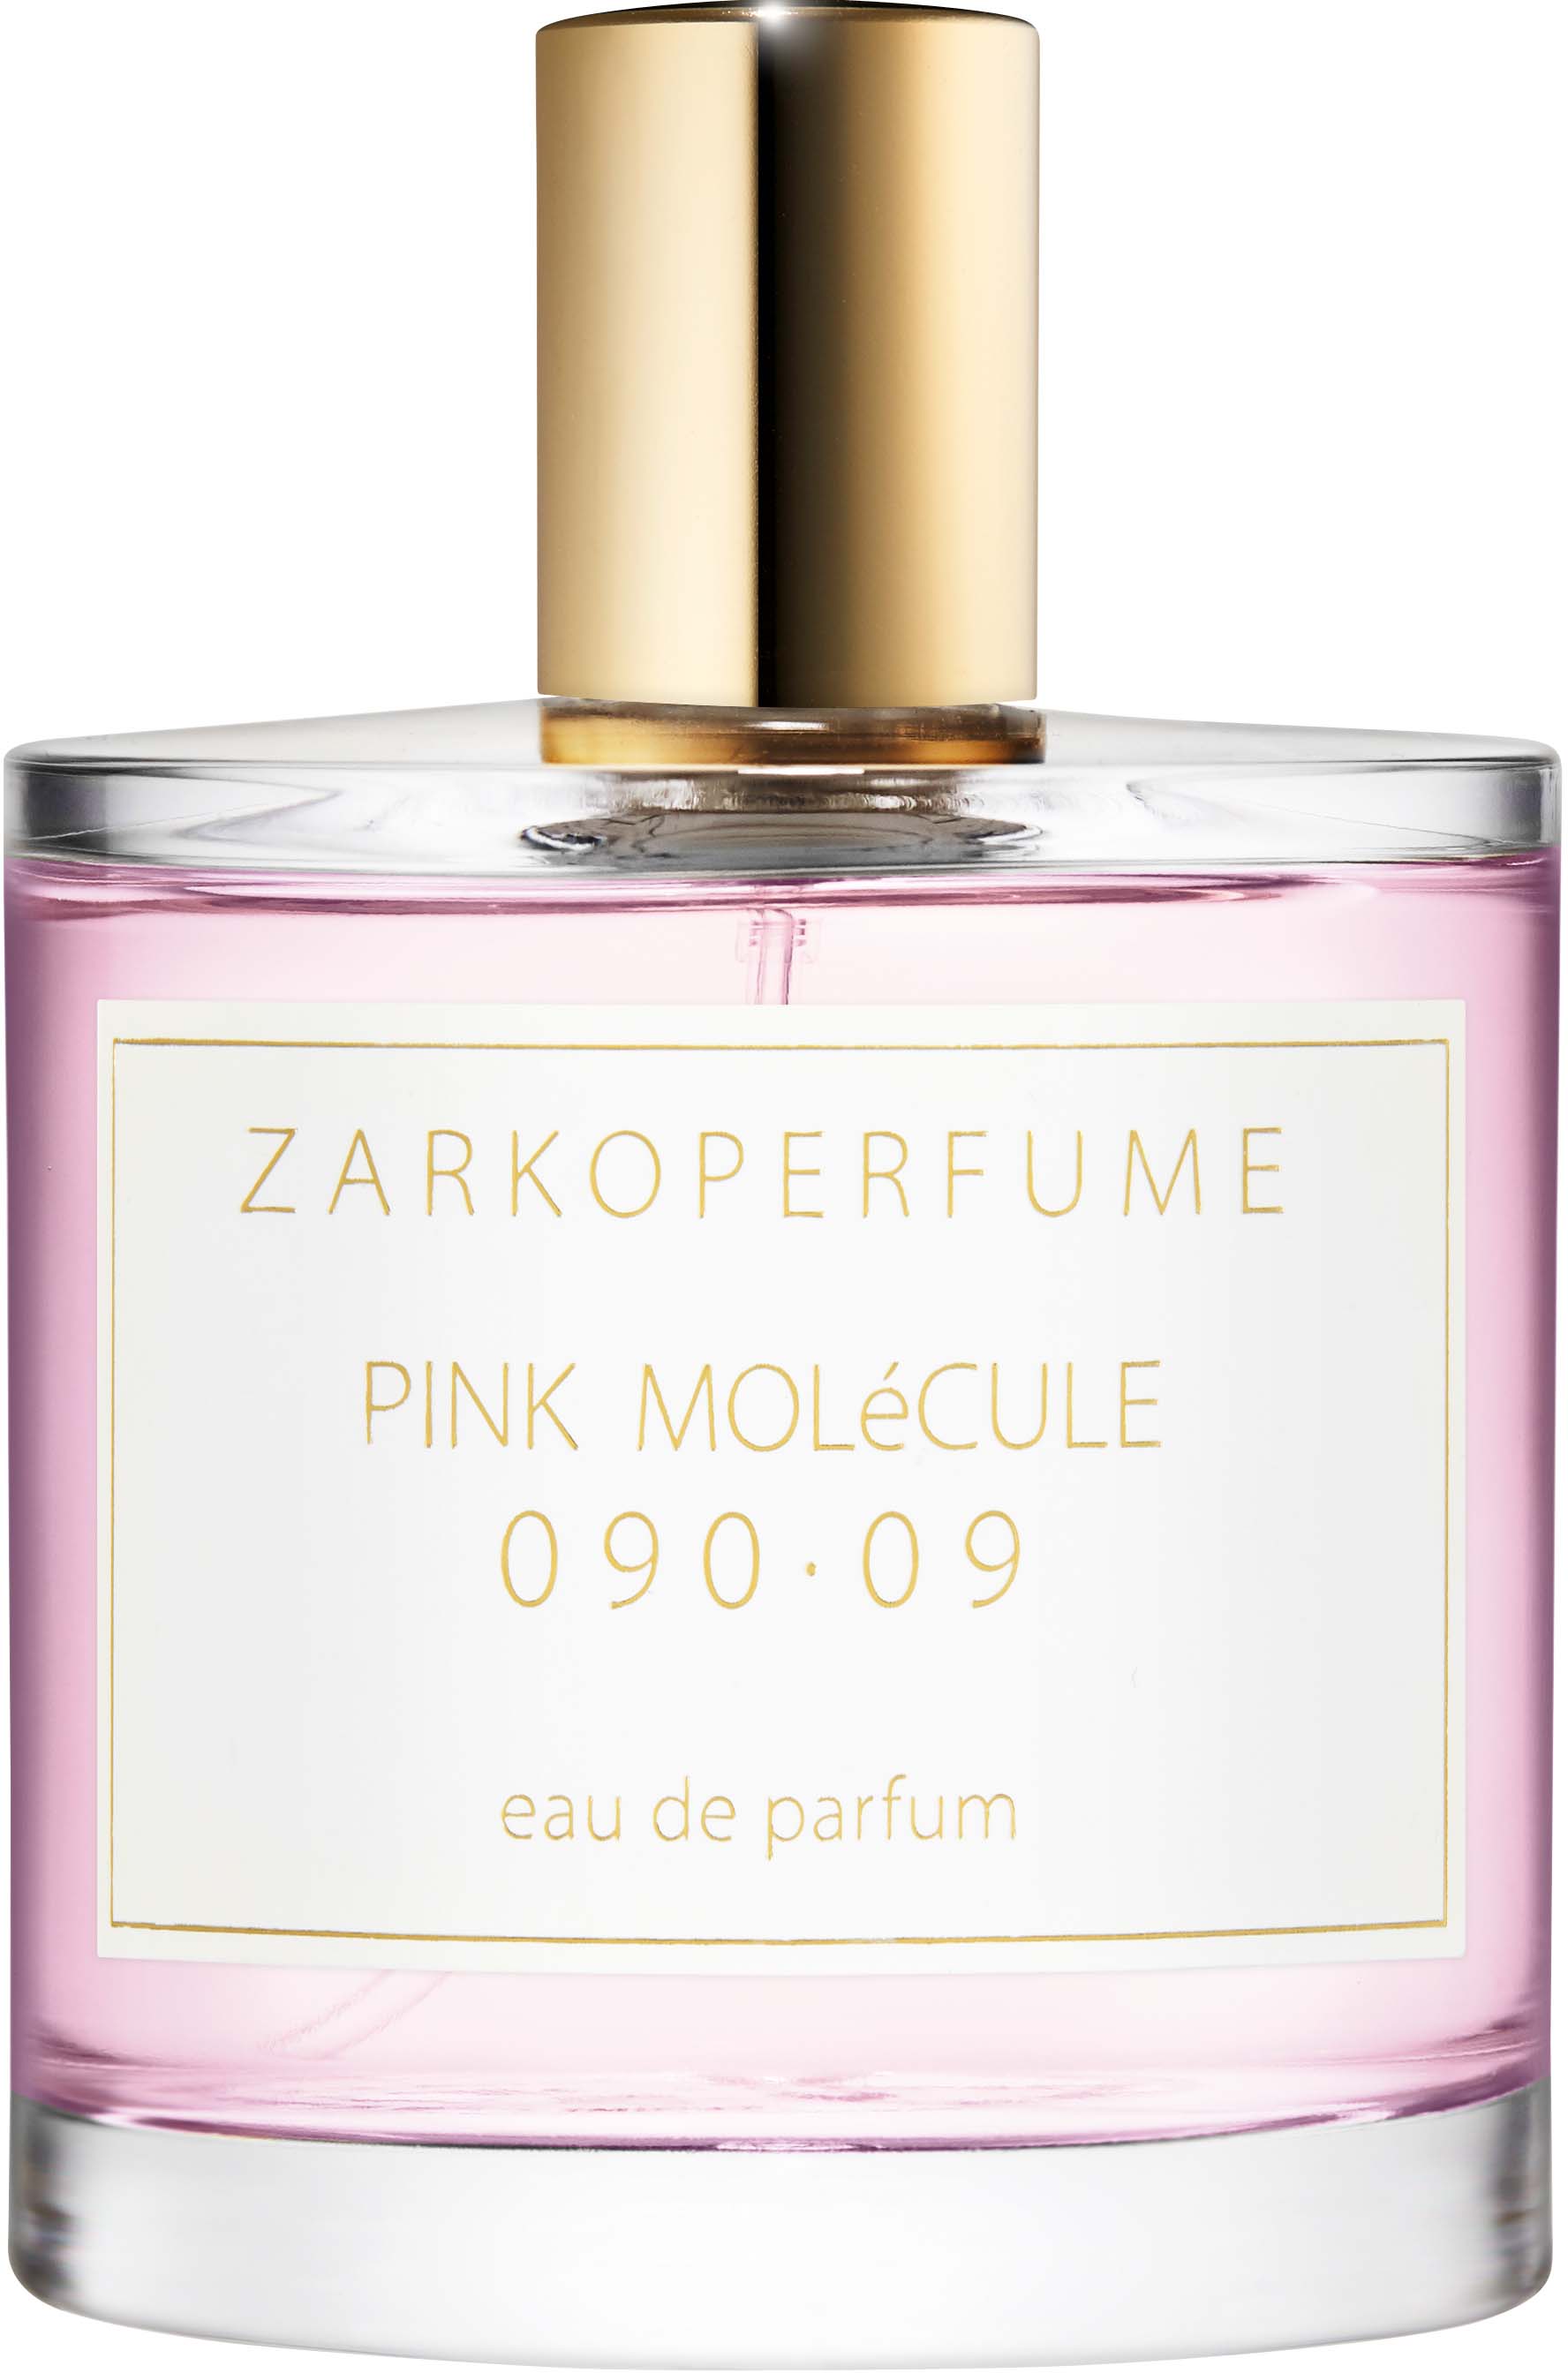 zarkoperfume pink molecule 090·09